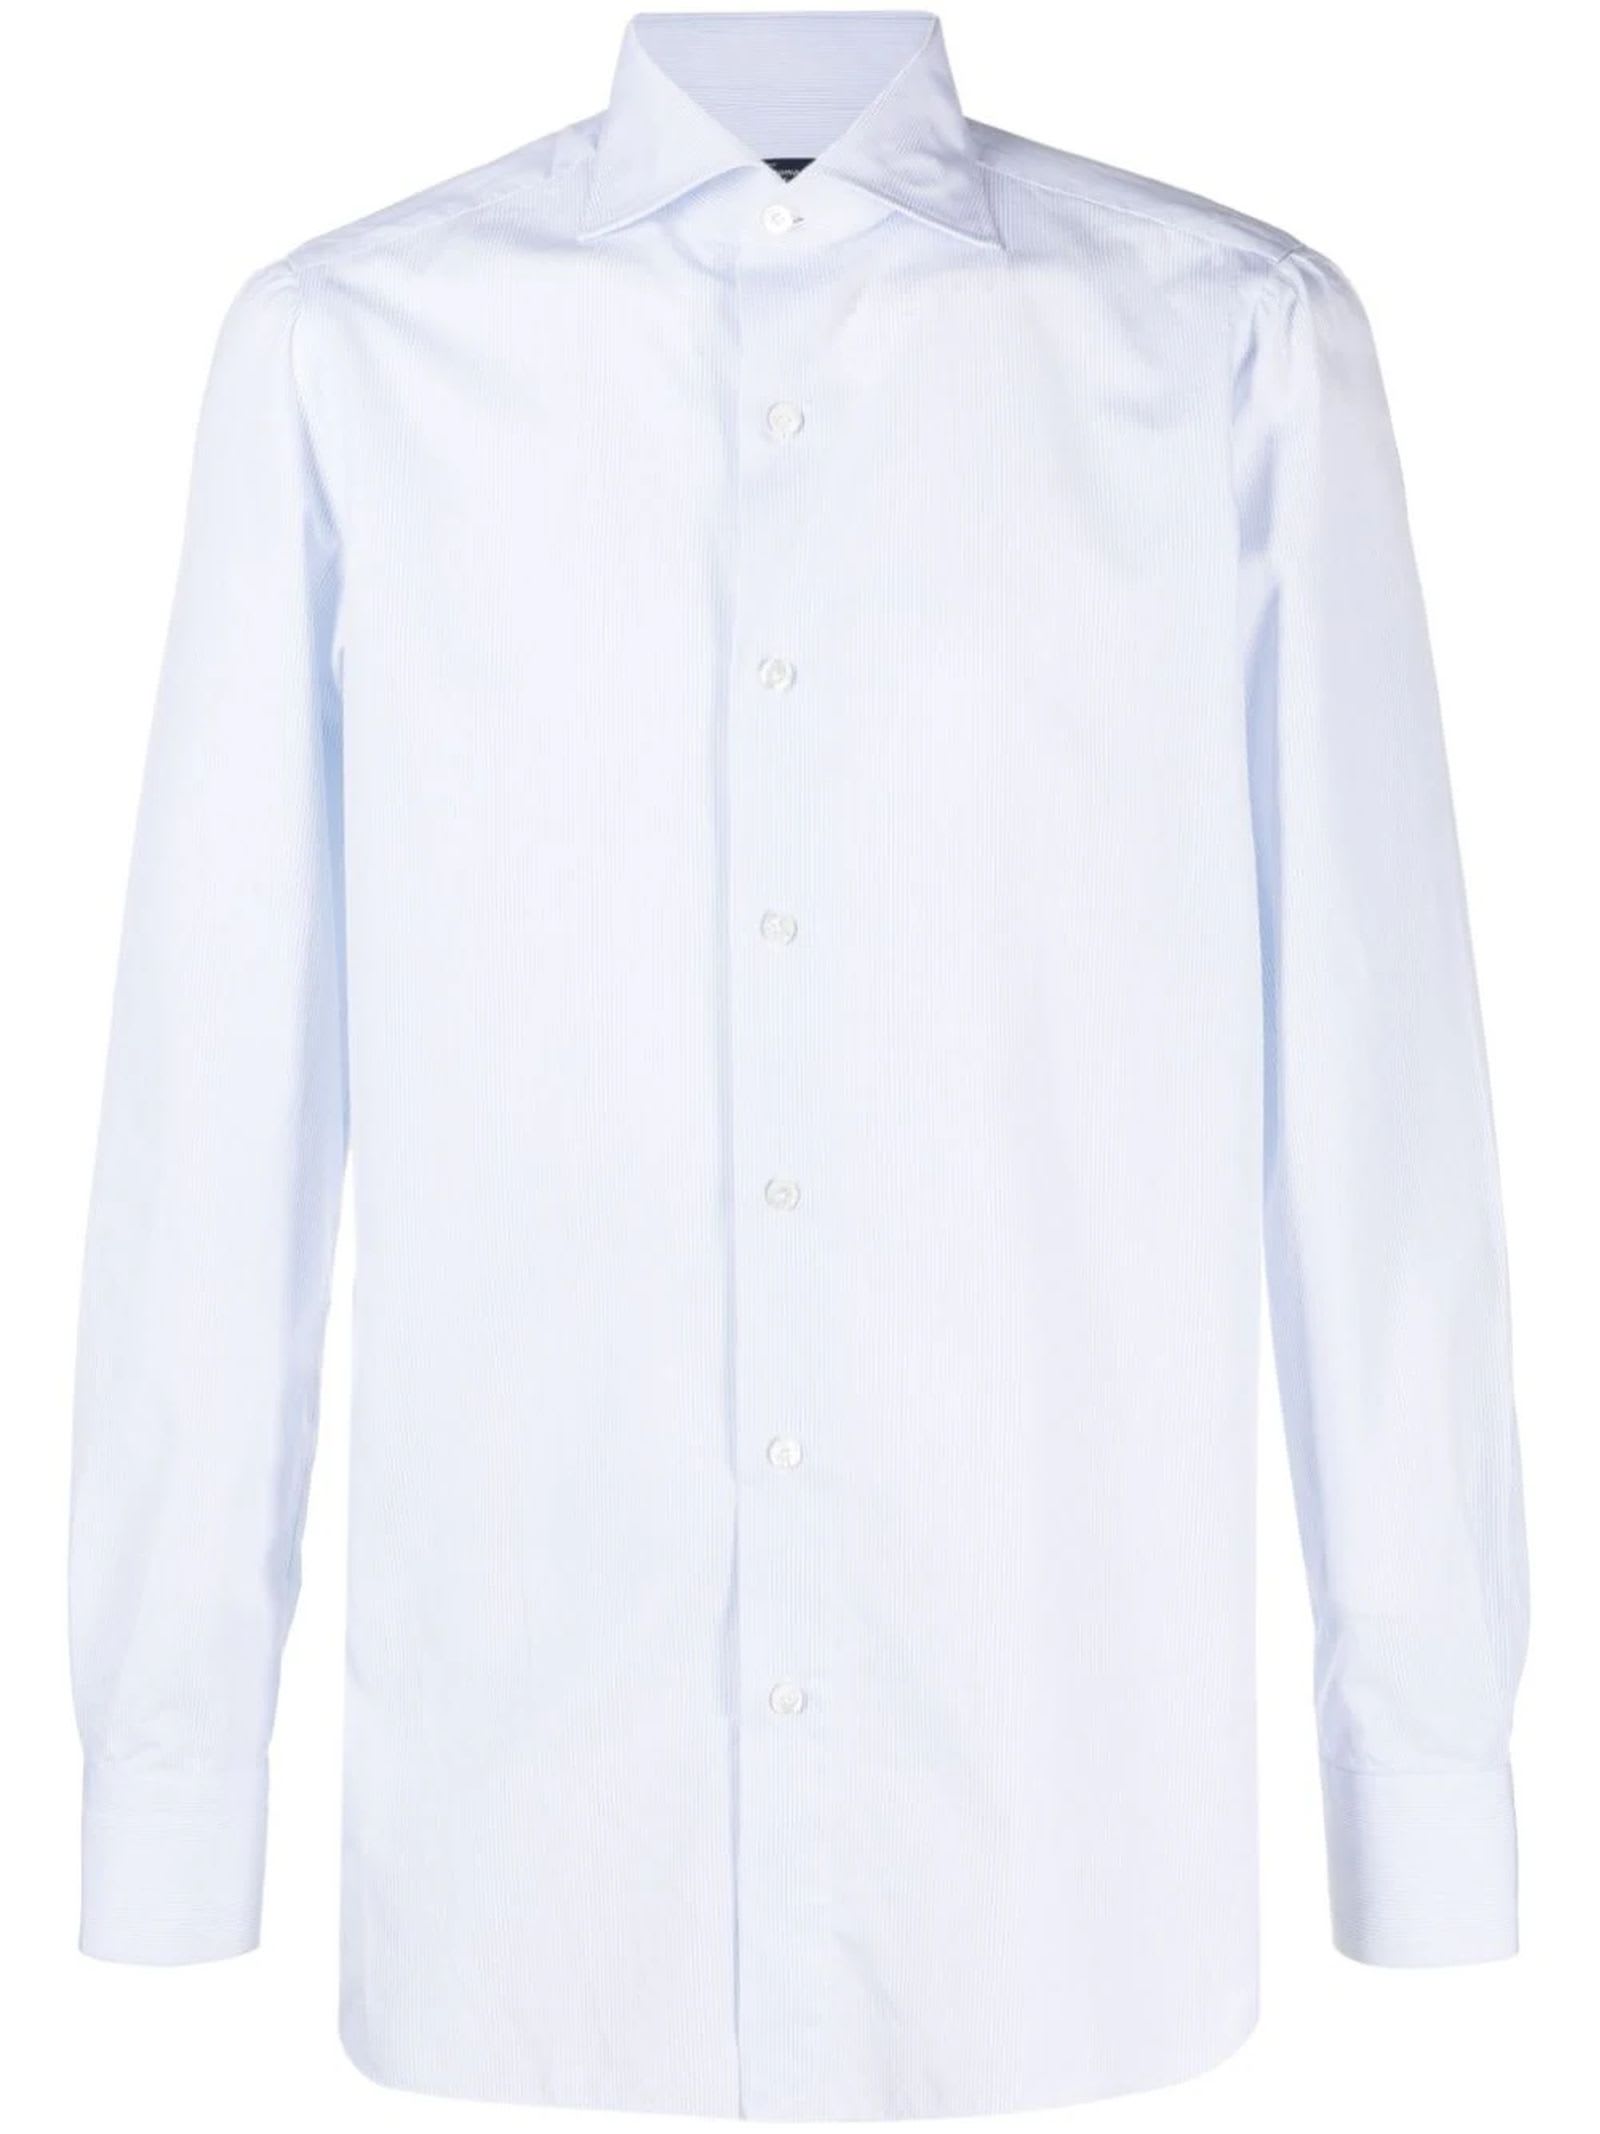 White And Light Blue Cotton Shirt